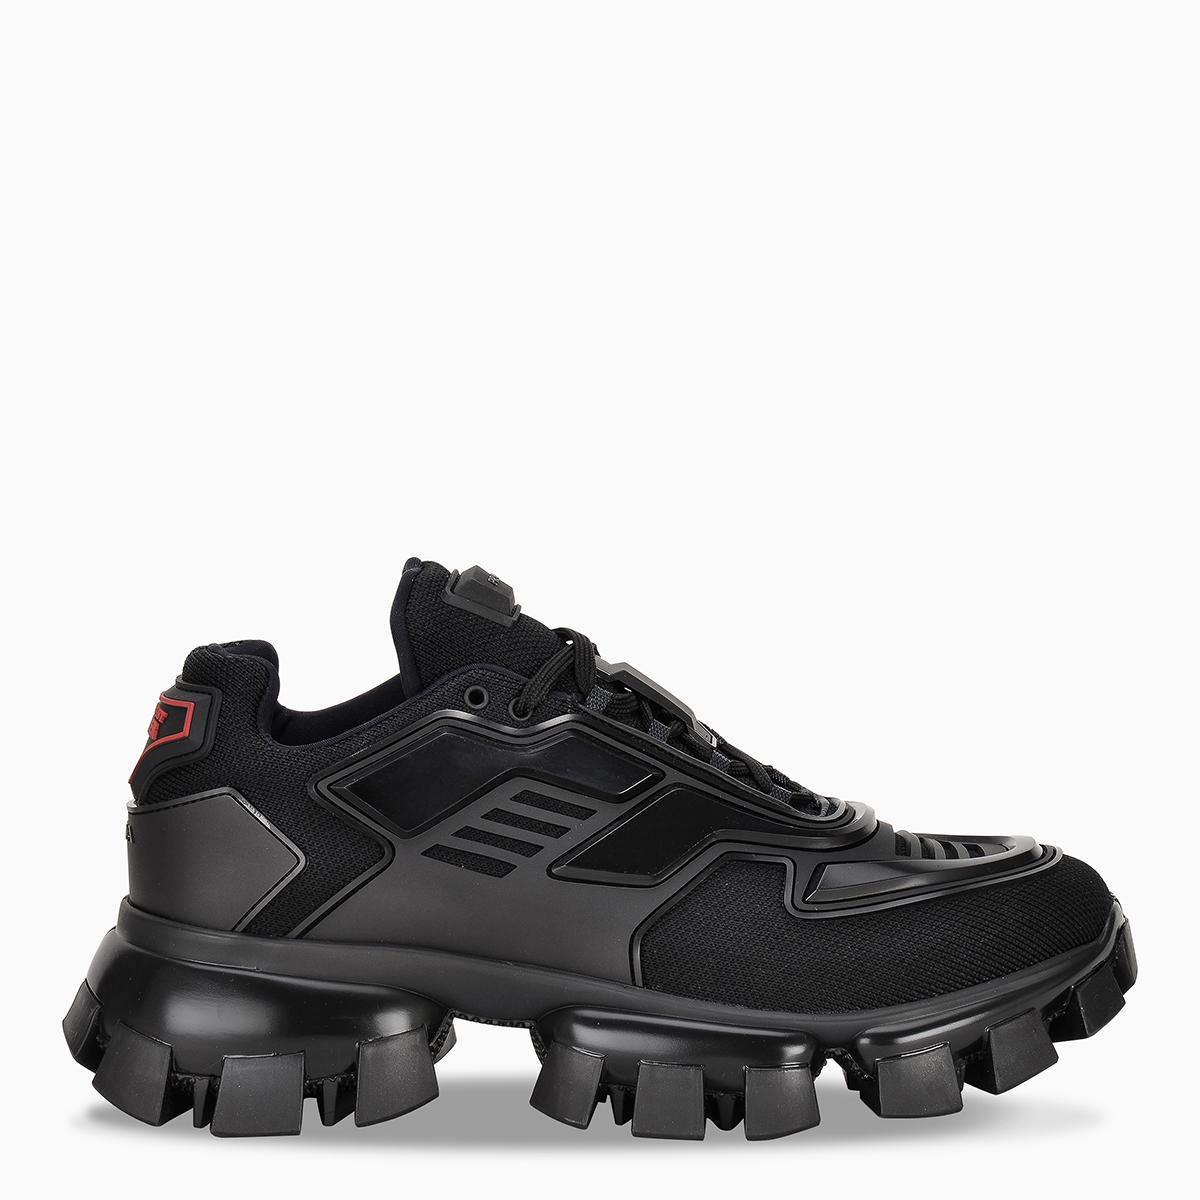 Prada Synthetic Cloudbust Thunder Black Sneakers for Men - Lyst